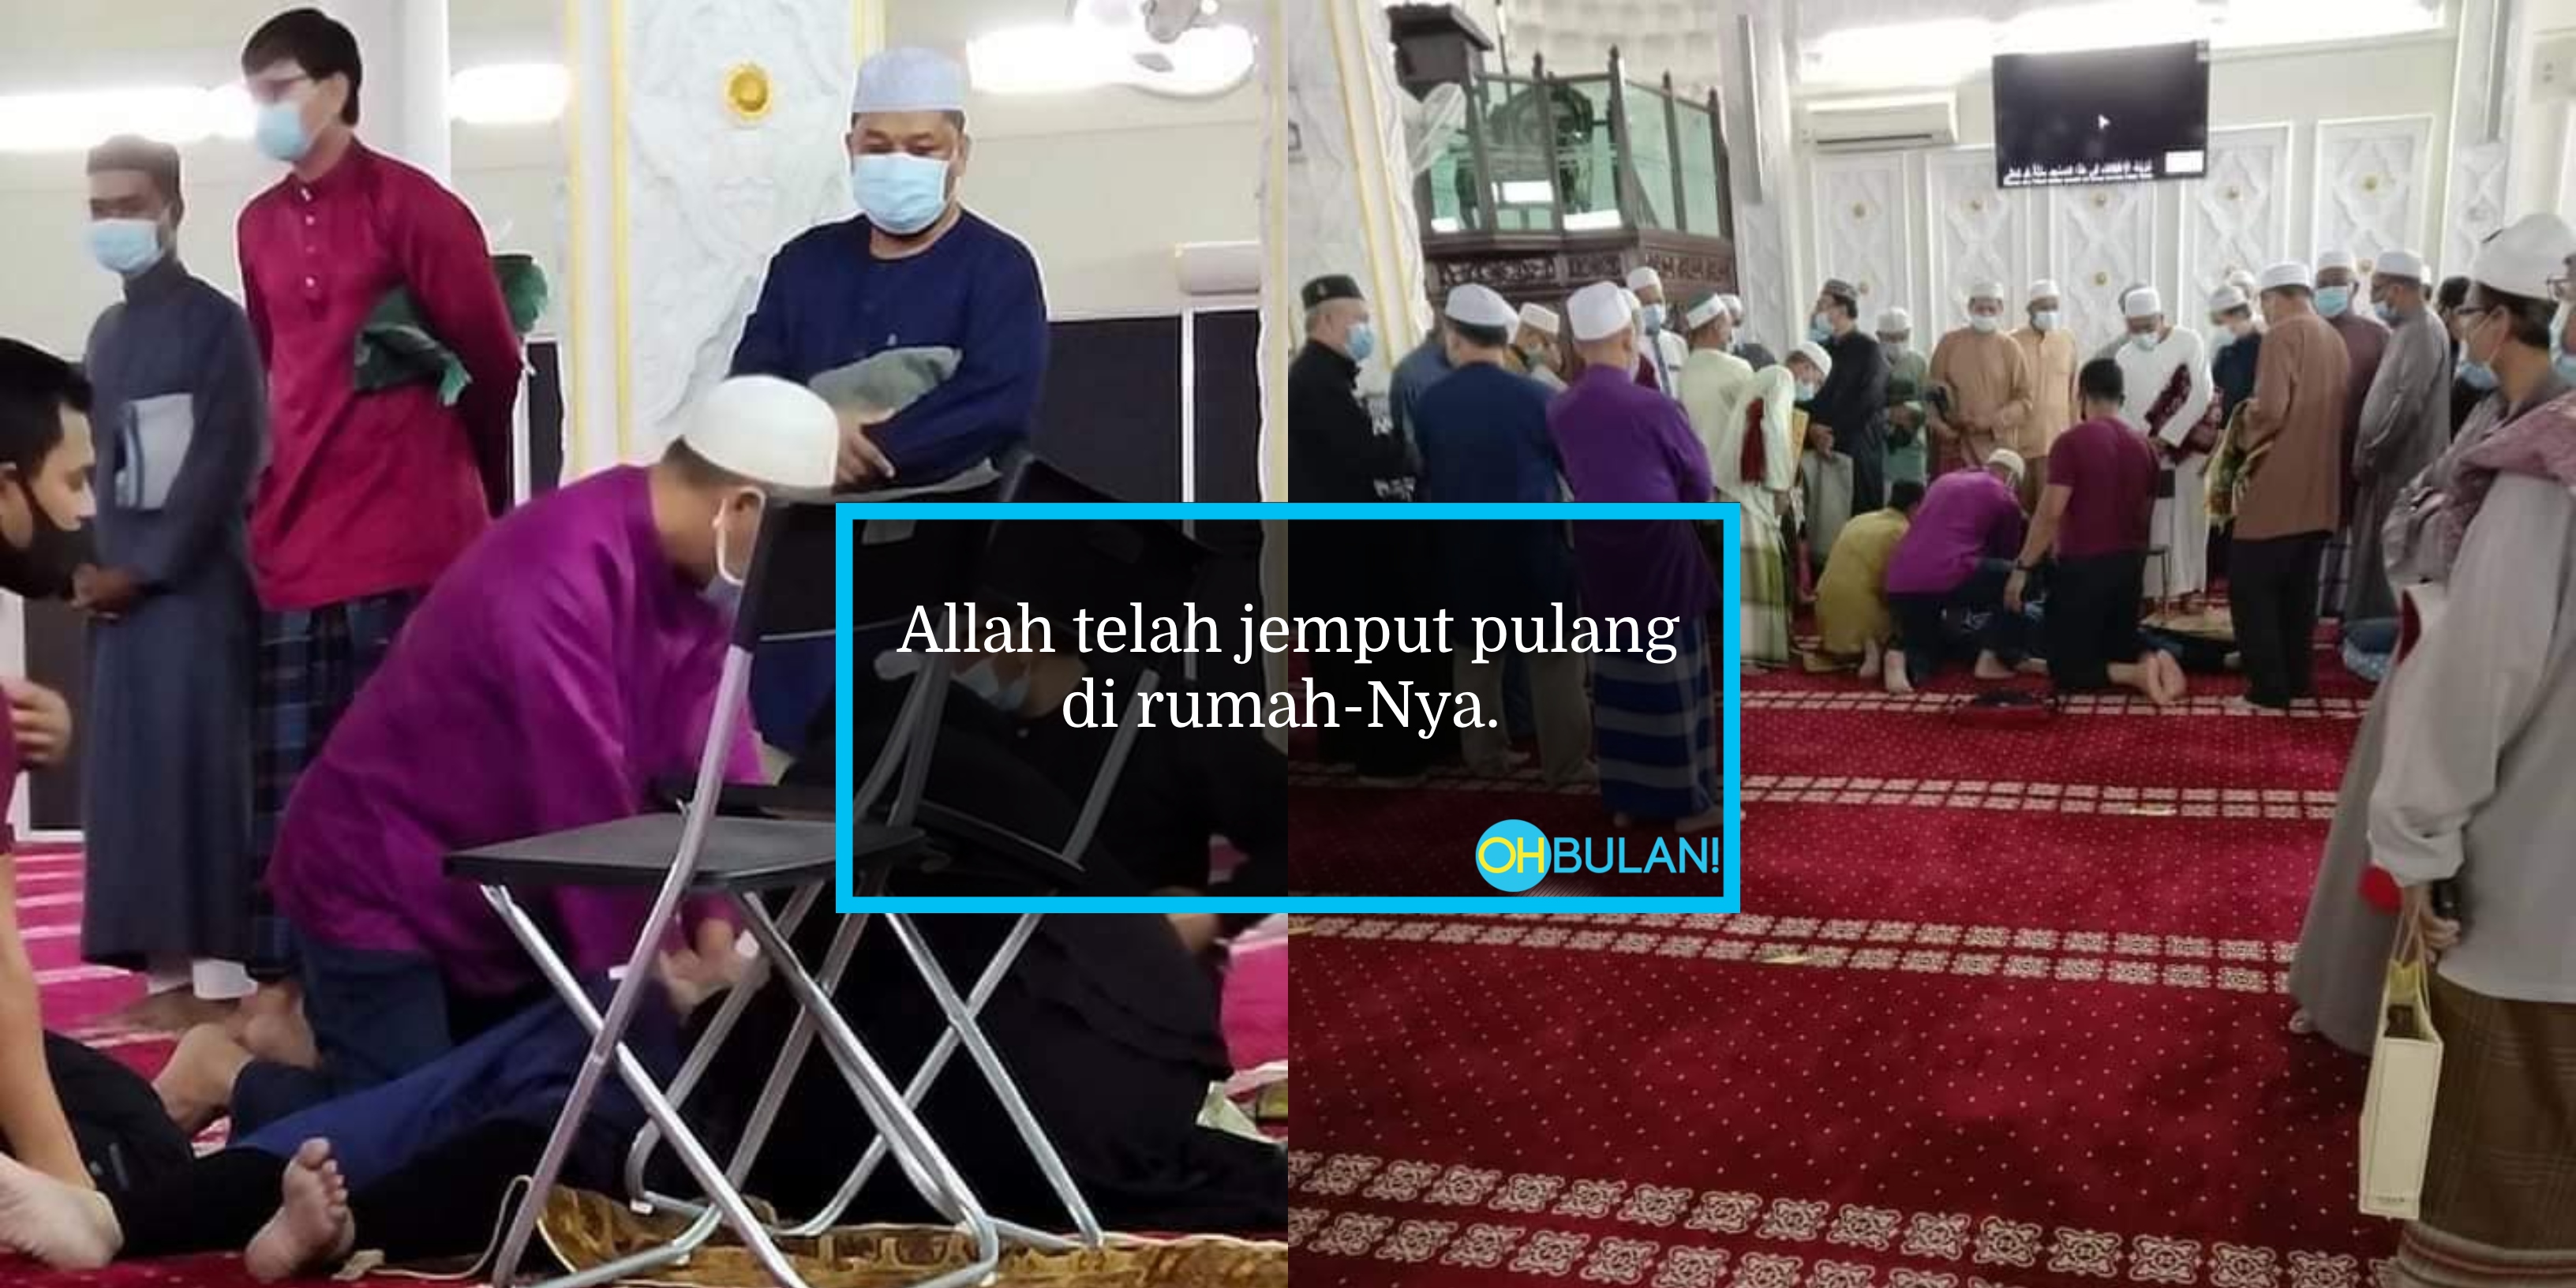 [FOTO] Kematian Yang Dicemburui, Jemaah Rebah Ketika Solat Isyak Di Masjid